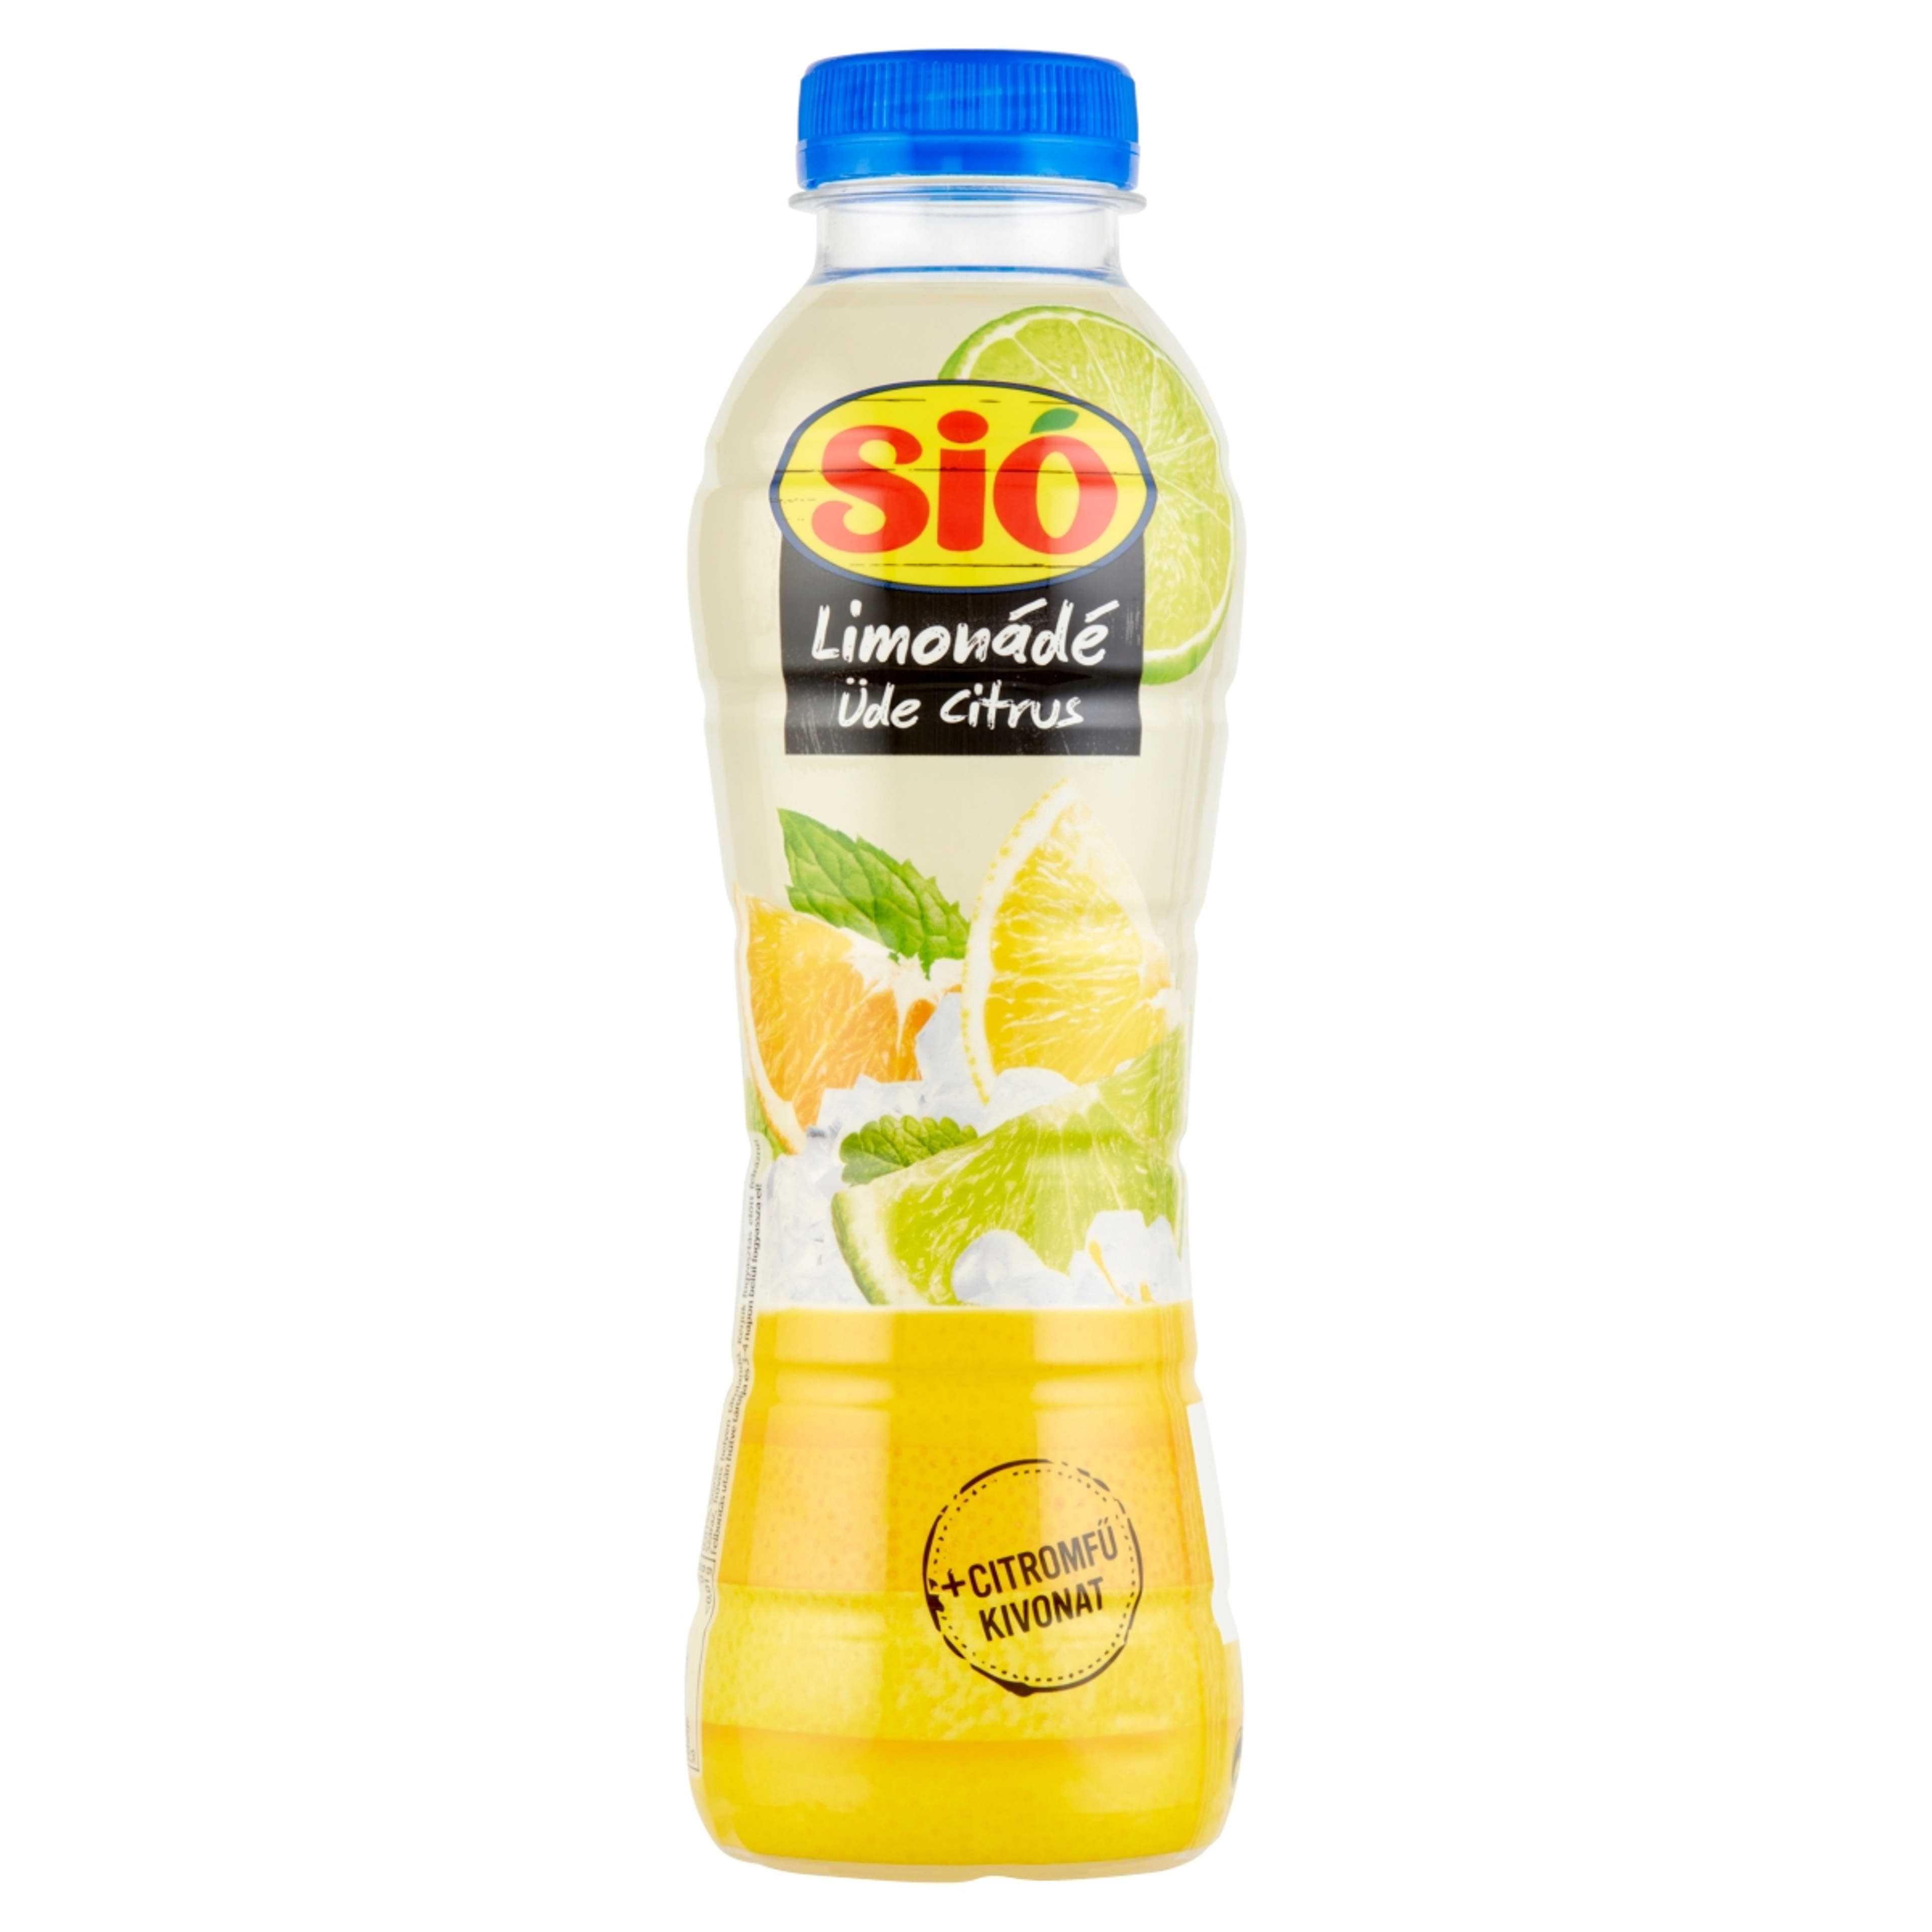 Sio limonádé üde citrus 8% - 500 ml